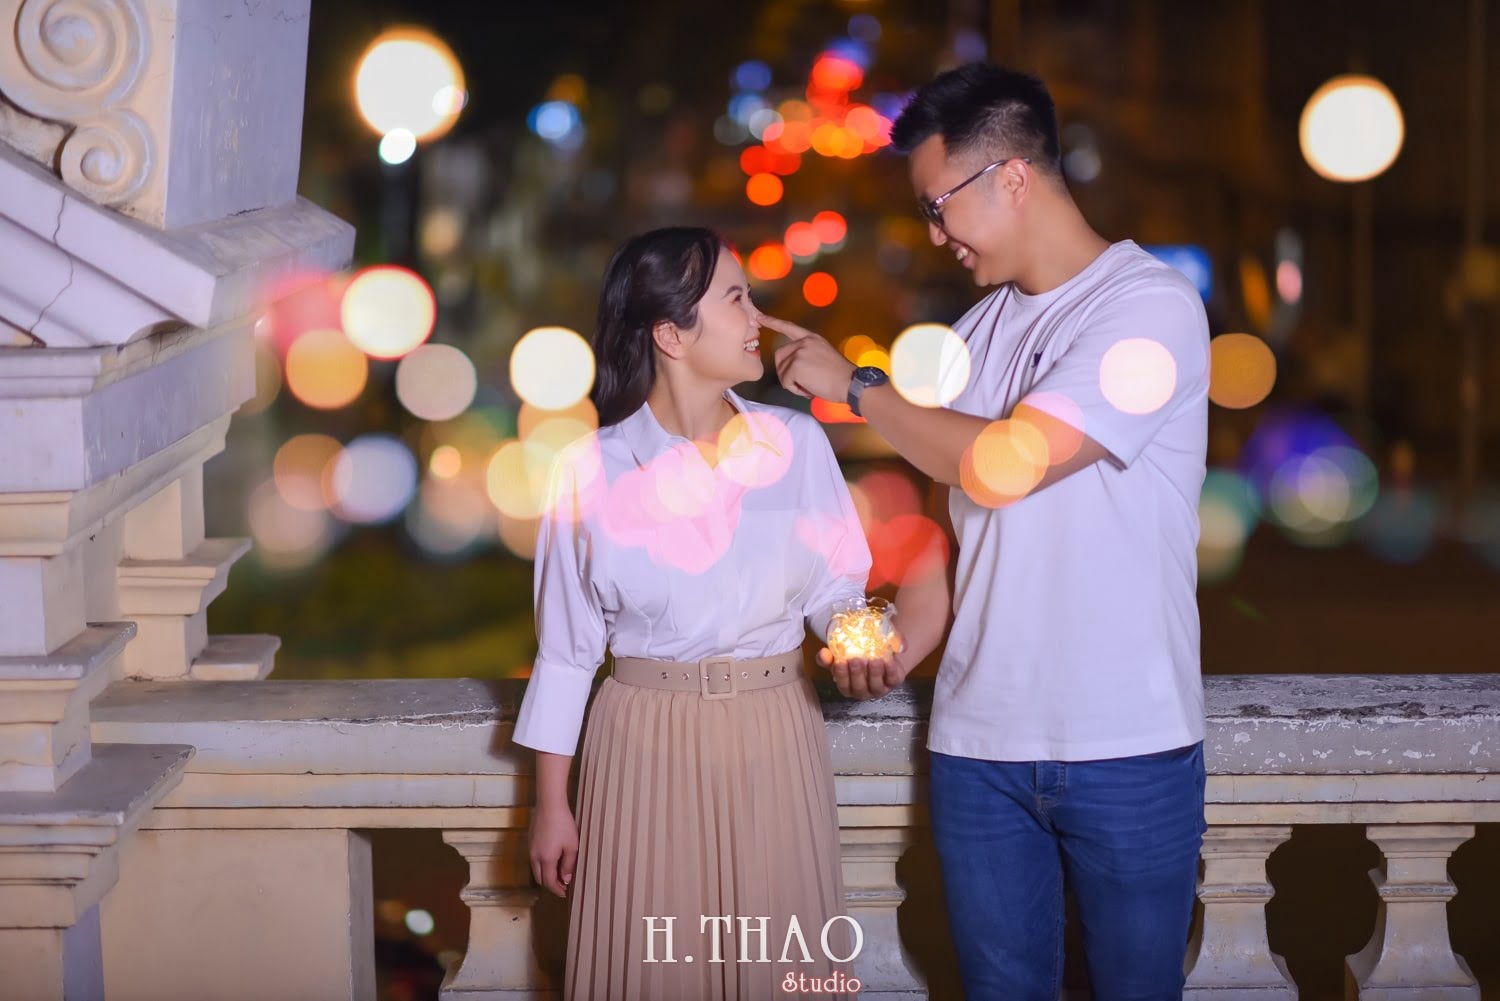 Anh chup couple ban dem 7 min - Album ảnh couple chụp buổi tối đẹp lung linh - HThao Studio